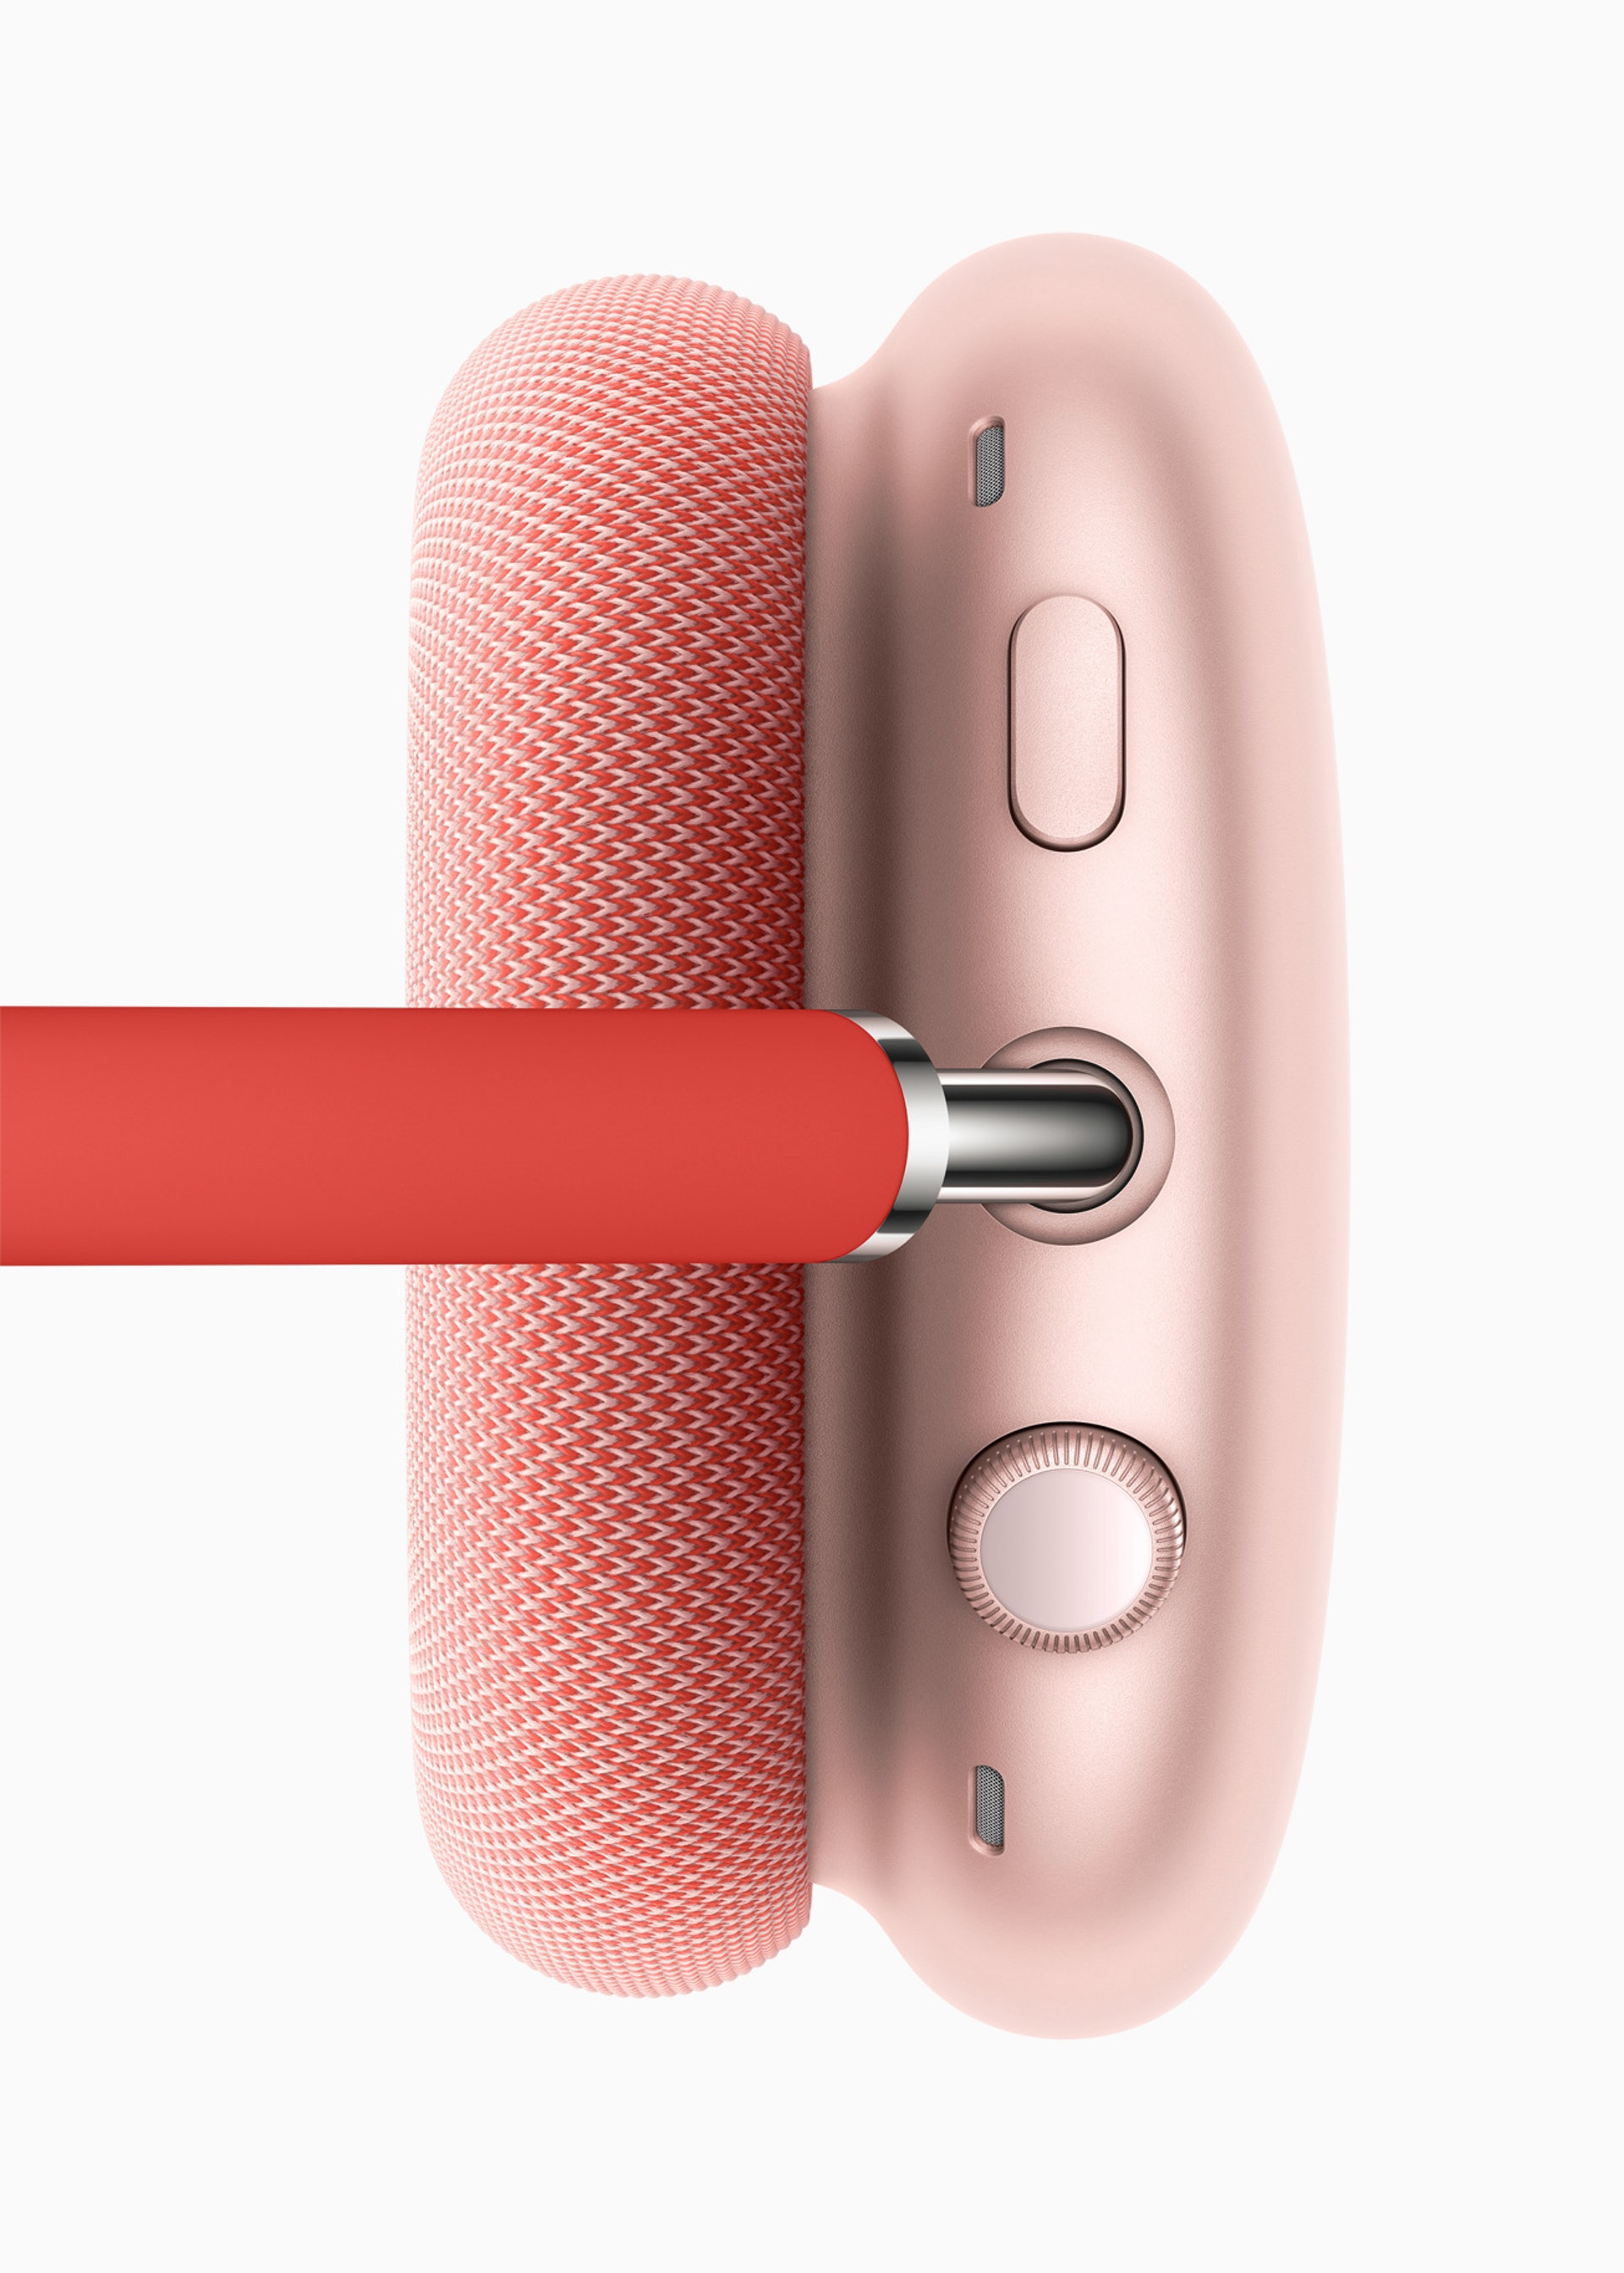 AirPods Max 採用了類似 Apple Watch 的 Digital Crown 設計，可用以精確控制音量、媒體播放以及喚出Siri 等等（圖 Apple）